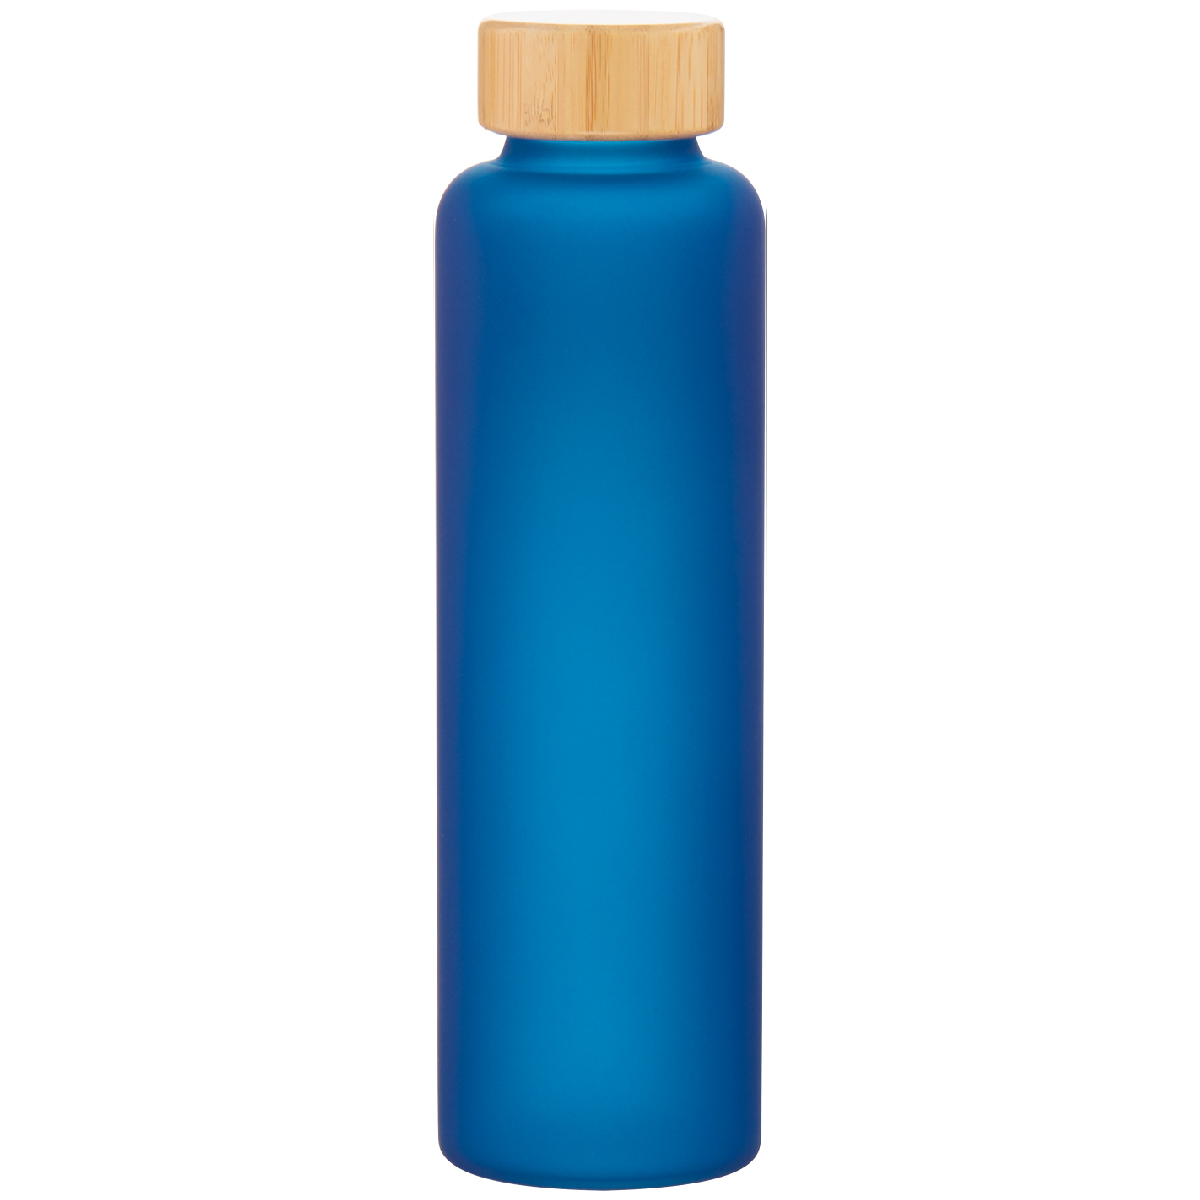 Cobalt Blue Rincon Glass Bottle 18 oz